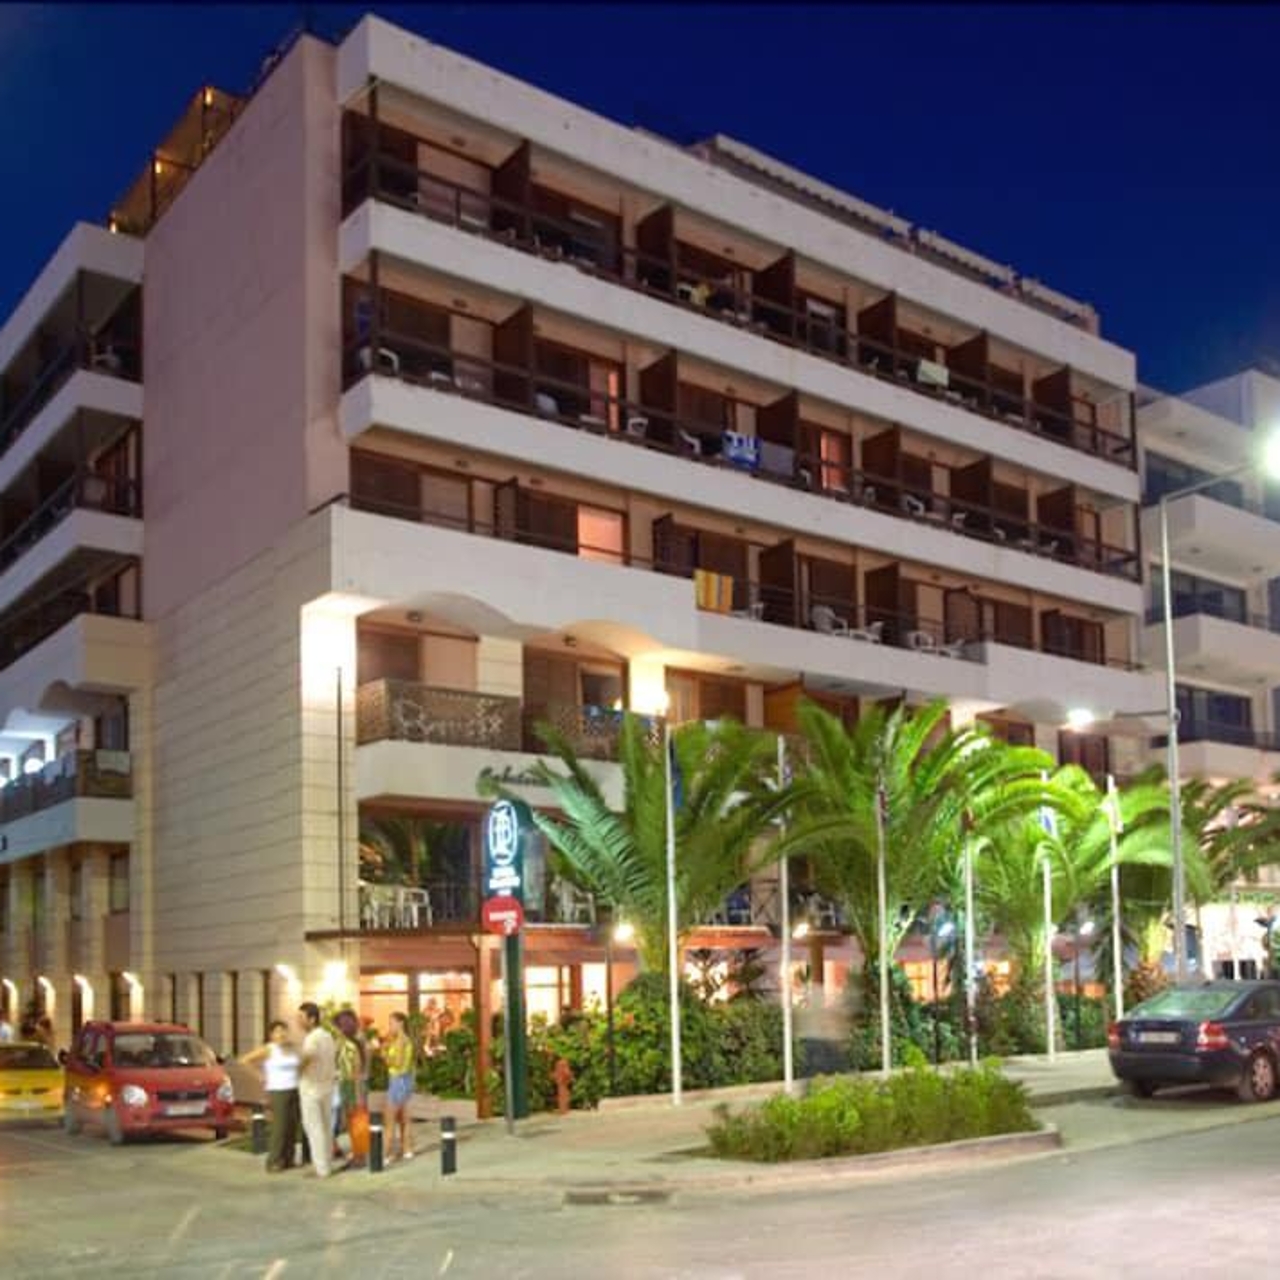 Brascos Hotel - 3 HRS star hotel in Rethymno (Crete)